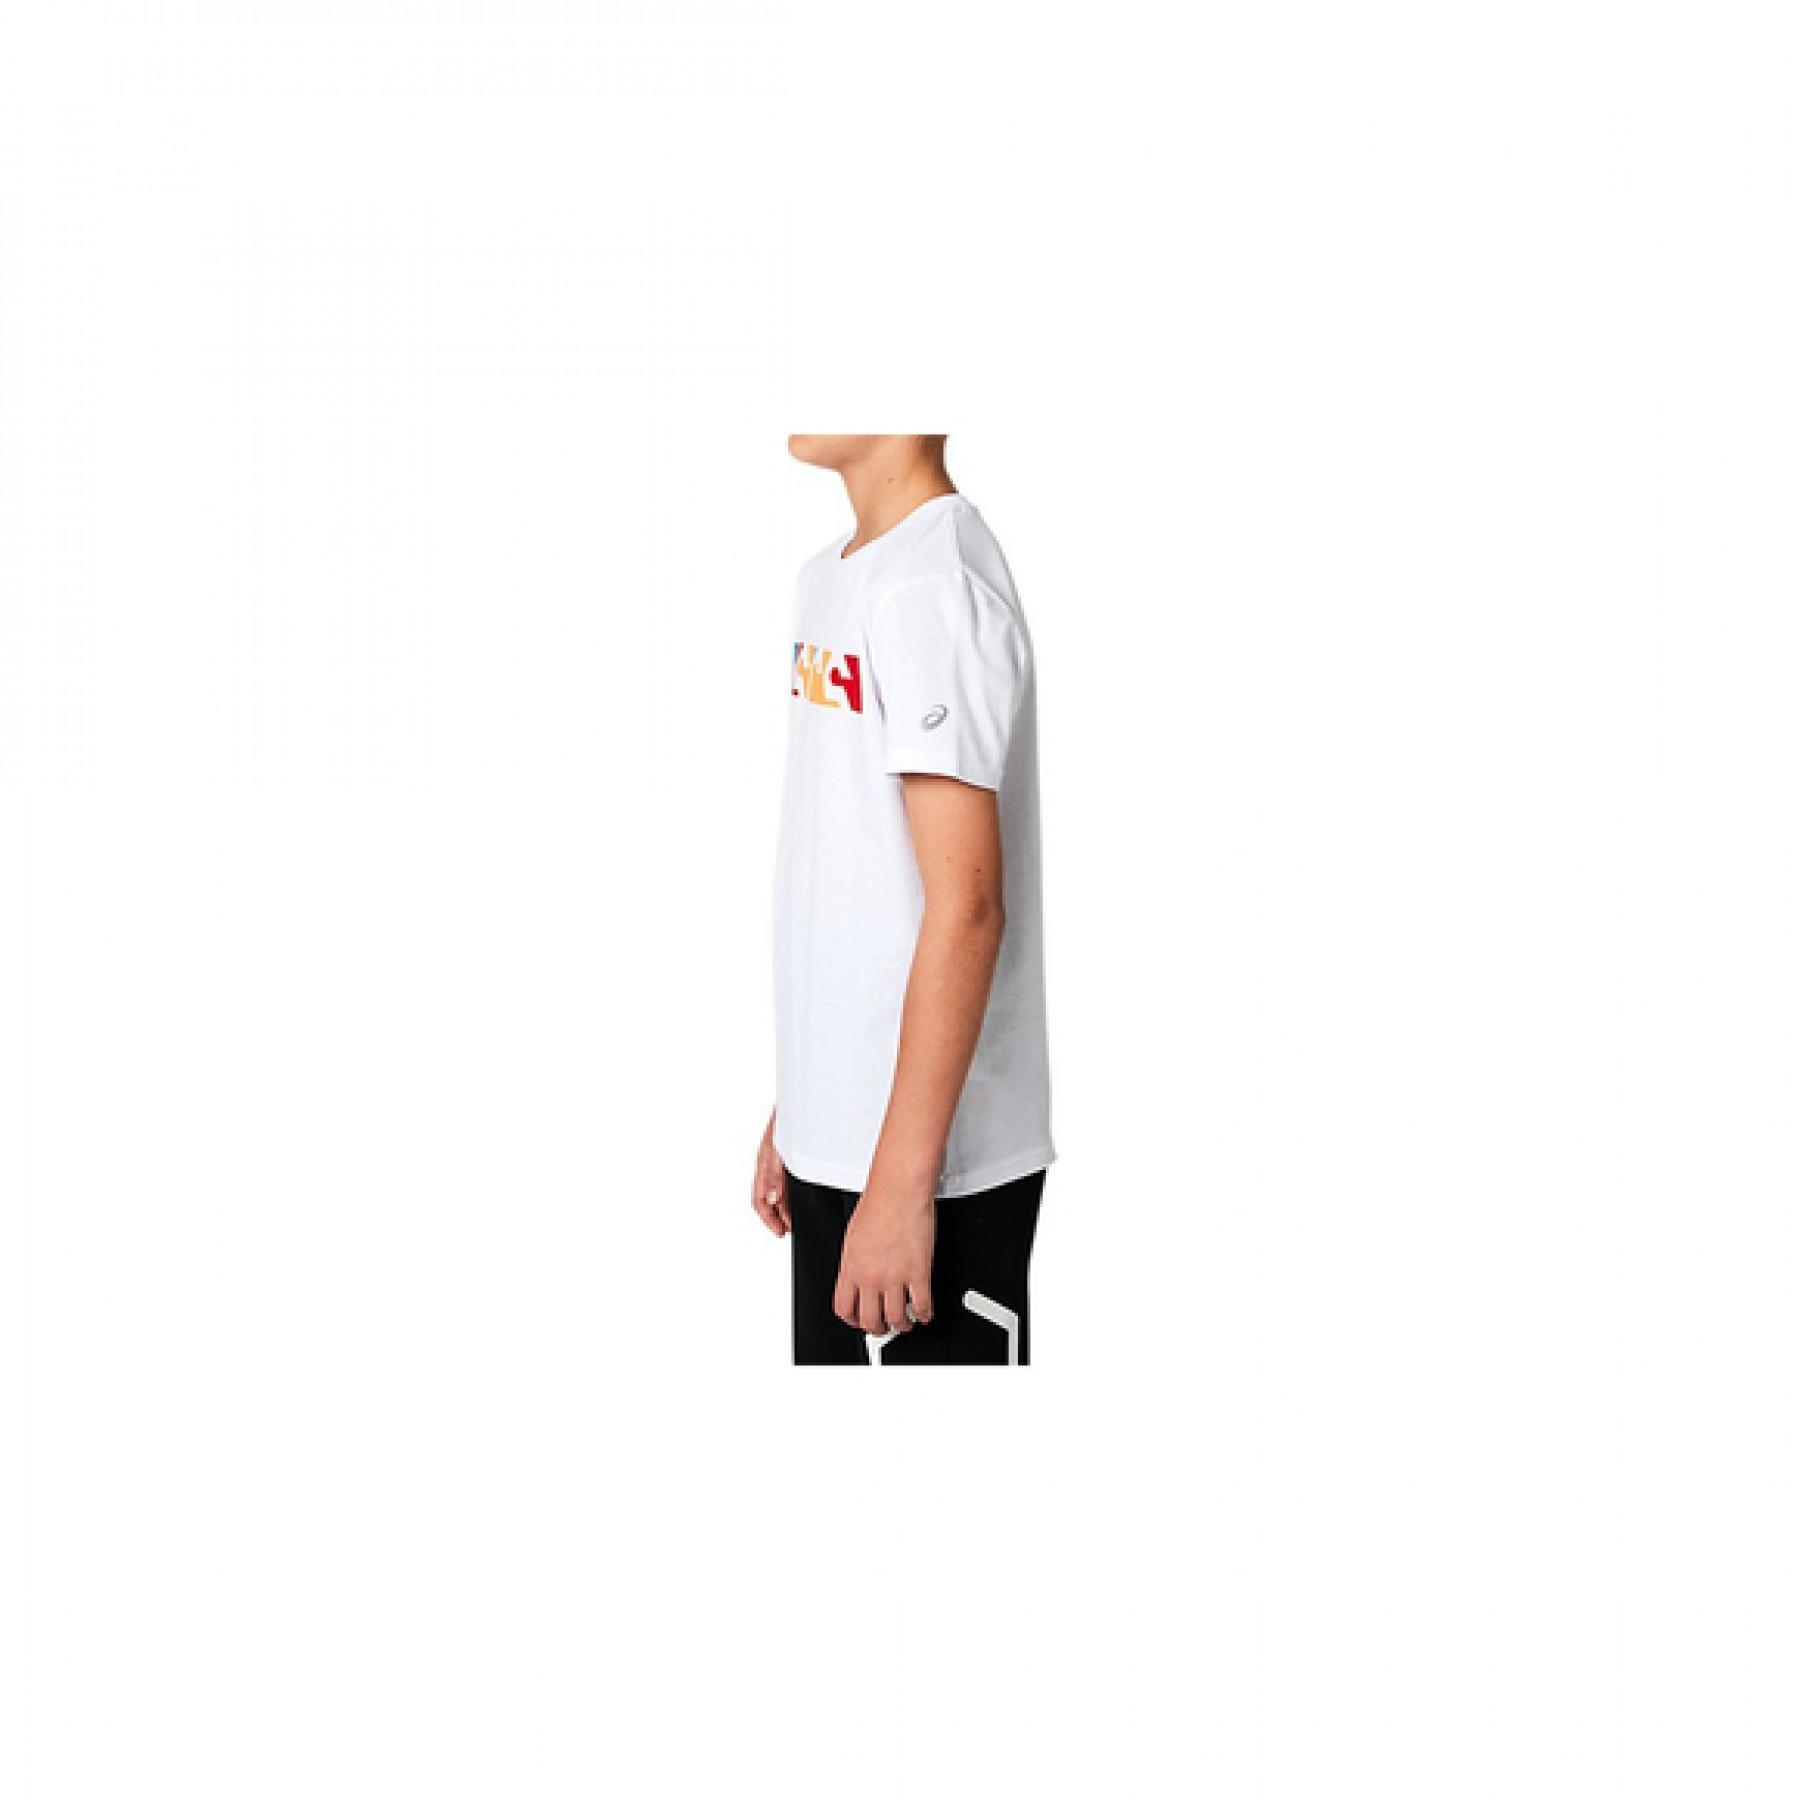 Camiseta para niños Asics b 3 color Gpxt